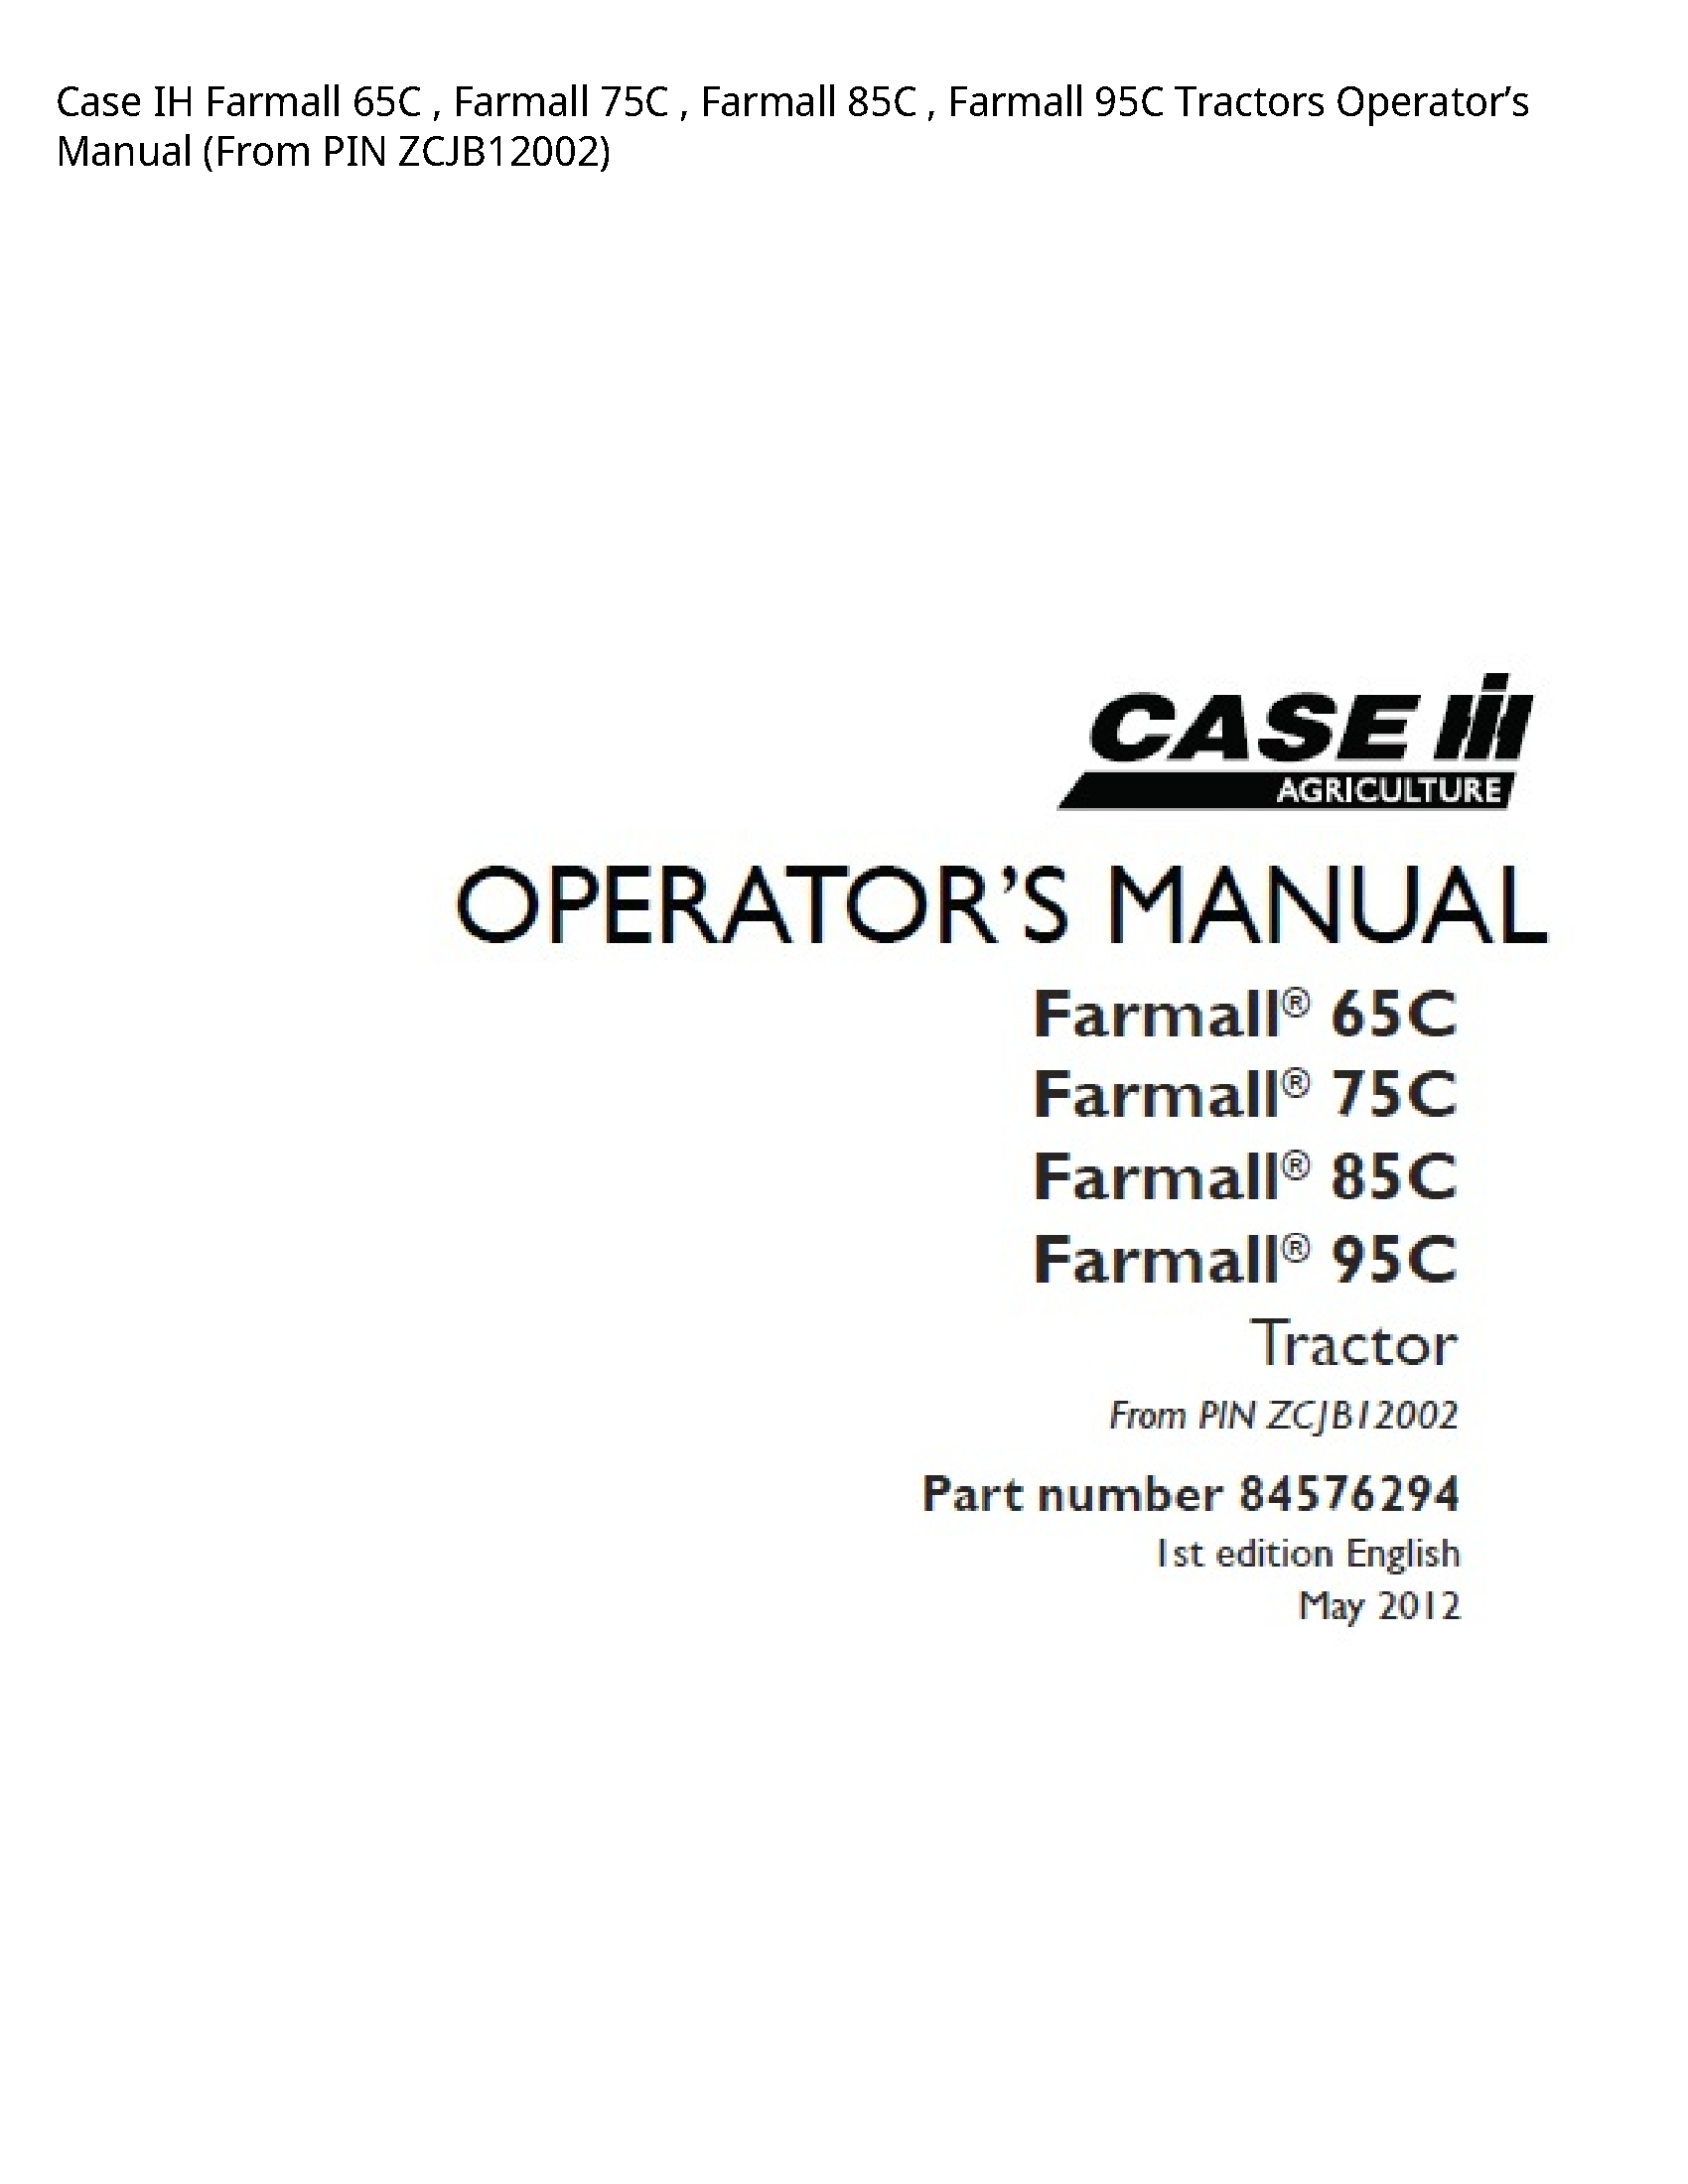 Case/Case IH 65C IH Farmall Farmall Farmall Farmall Tractors Operator’s manual